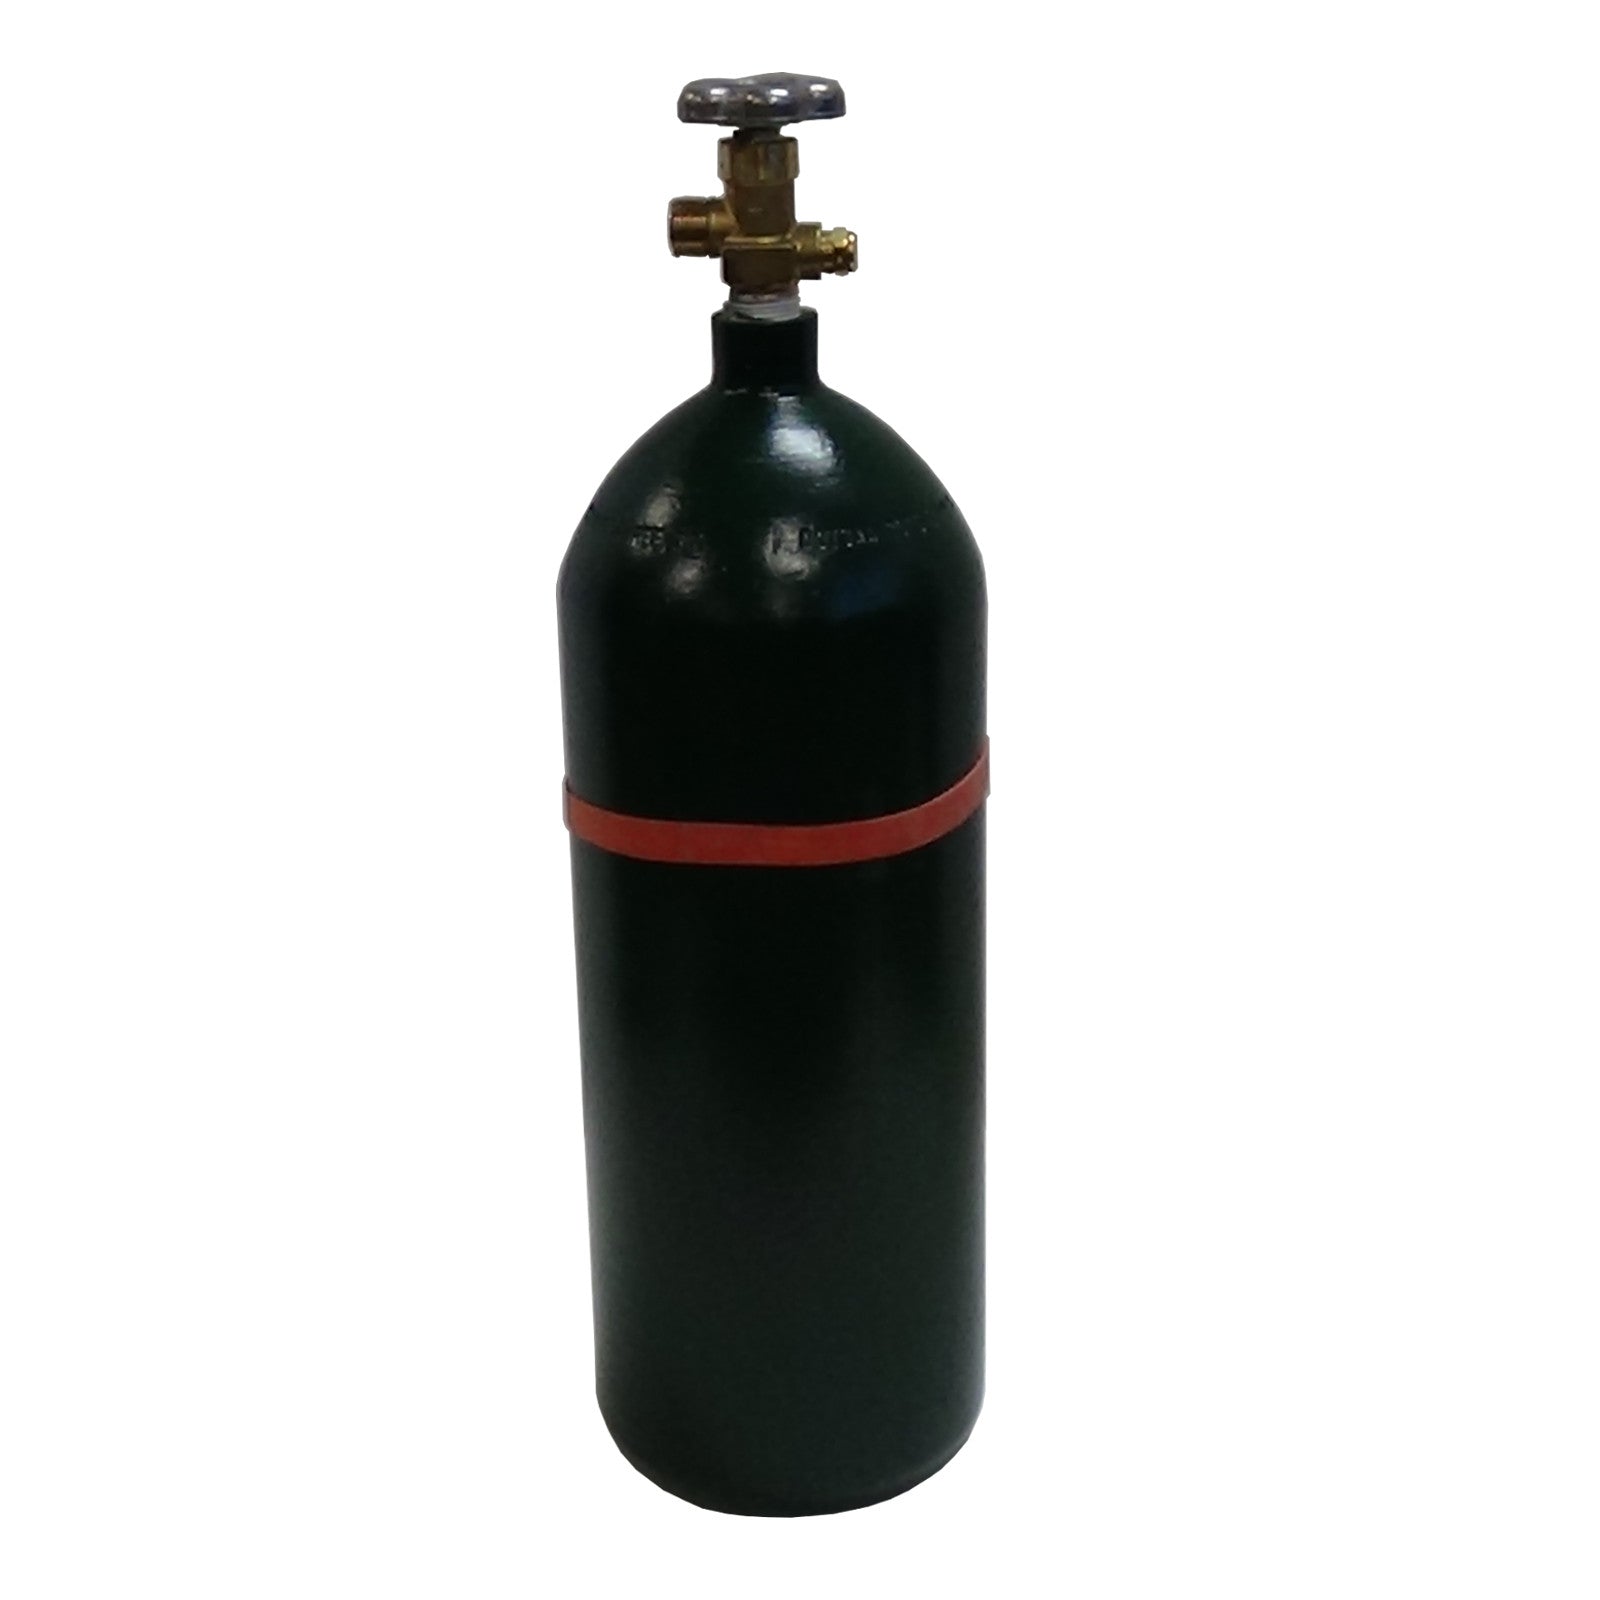 40 CF Welding Cylinder For Oxygen